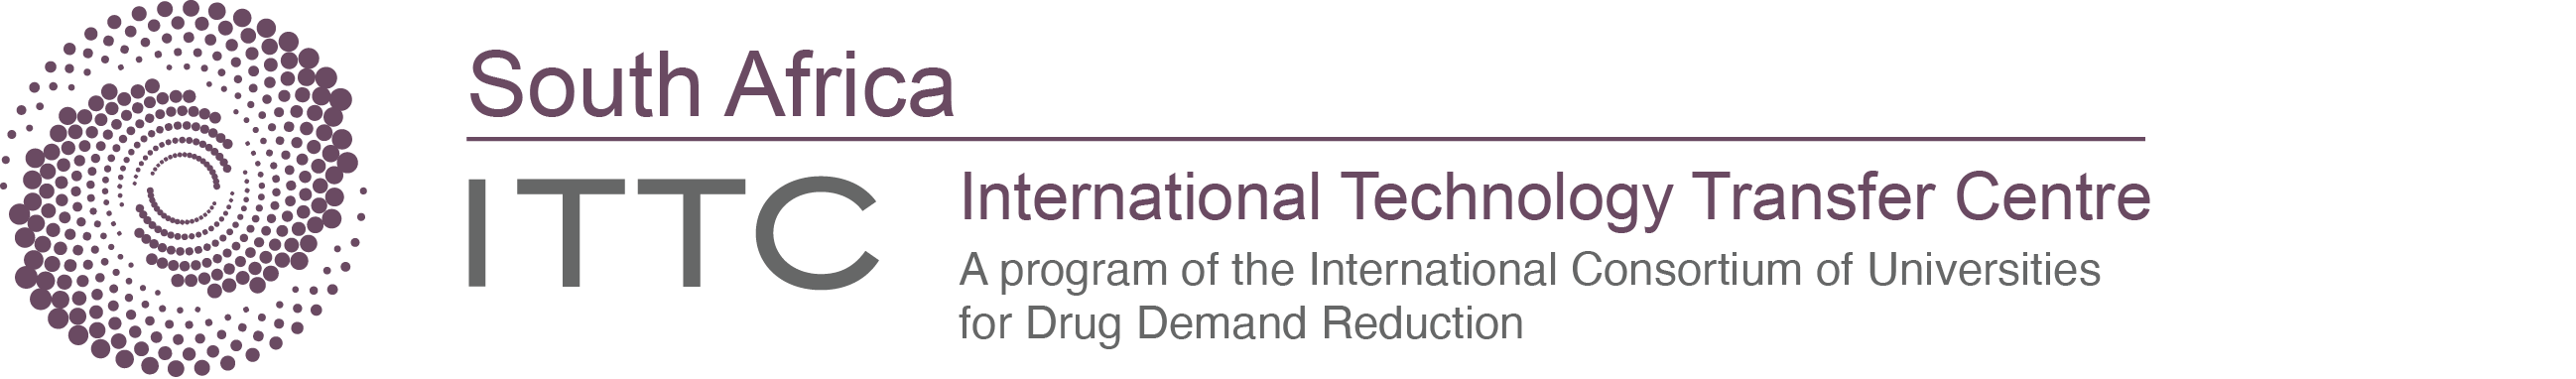 South Africa International Technology Transfer Center Logo